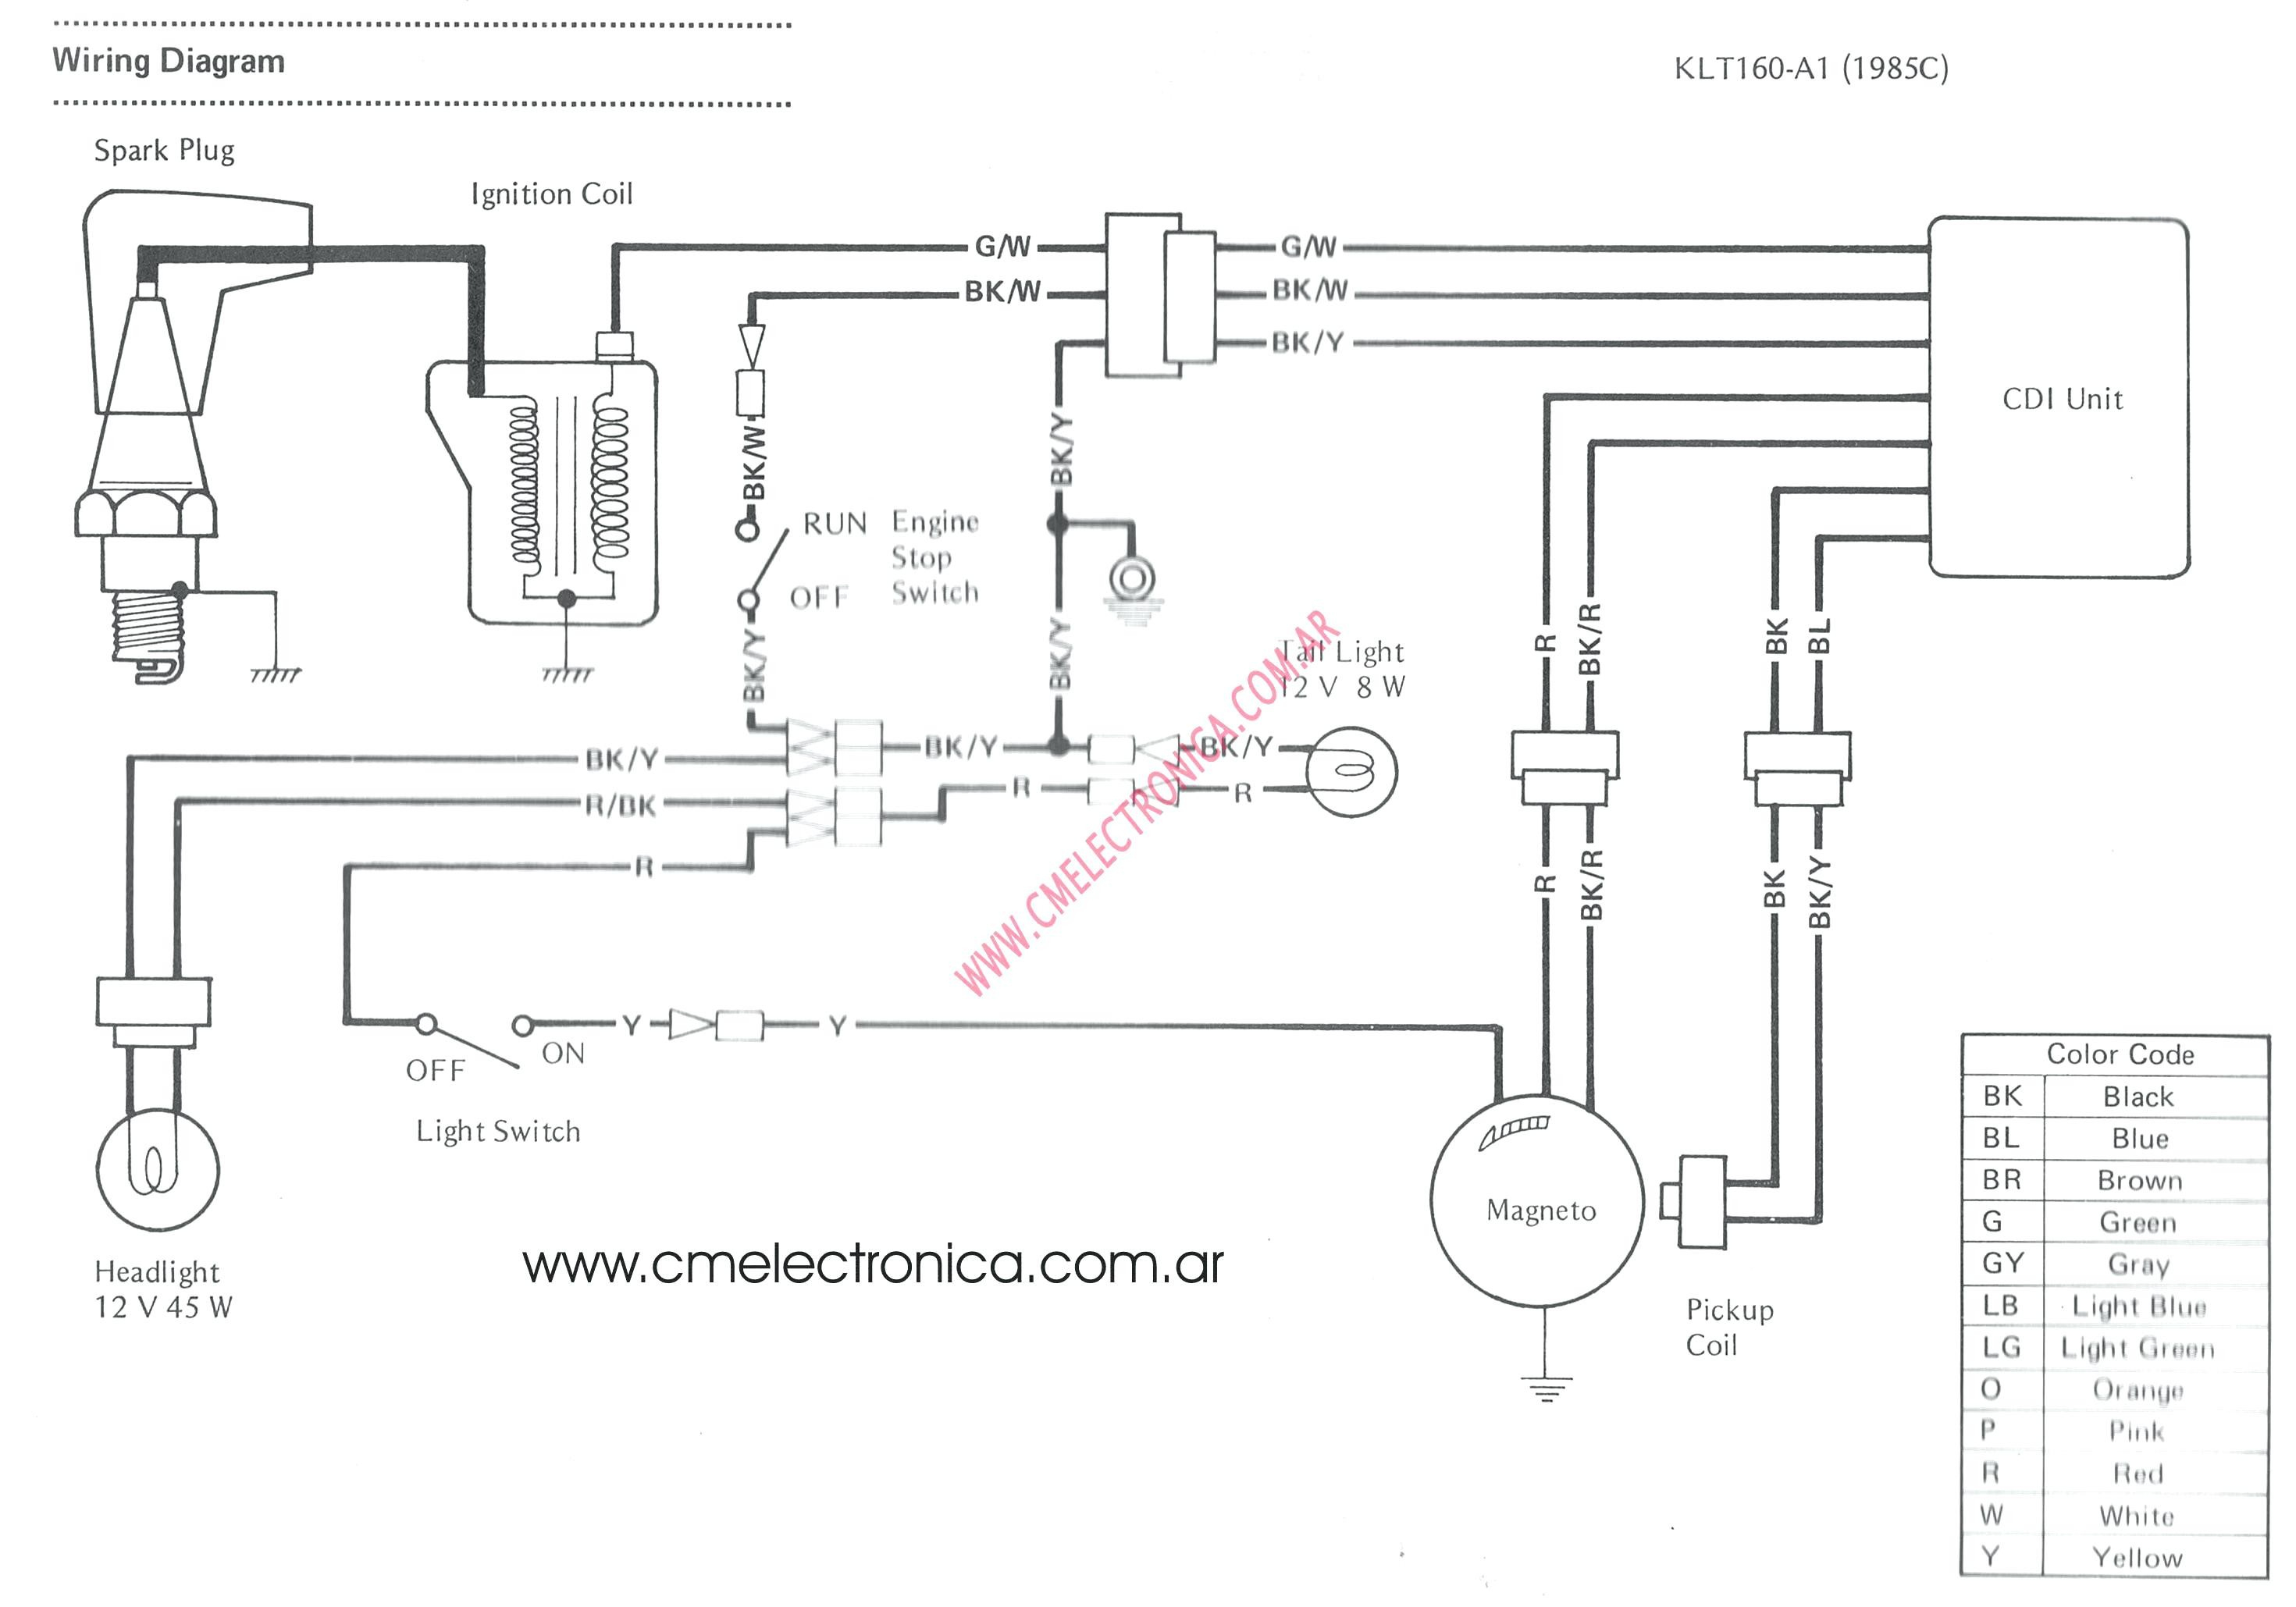 John Deere Gator Electrical Schematic | Wiring Library - John Deere Wiring Diagram Download